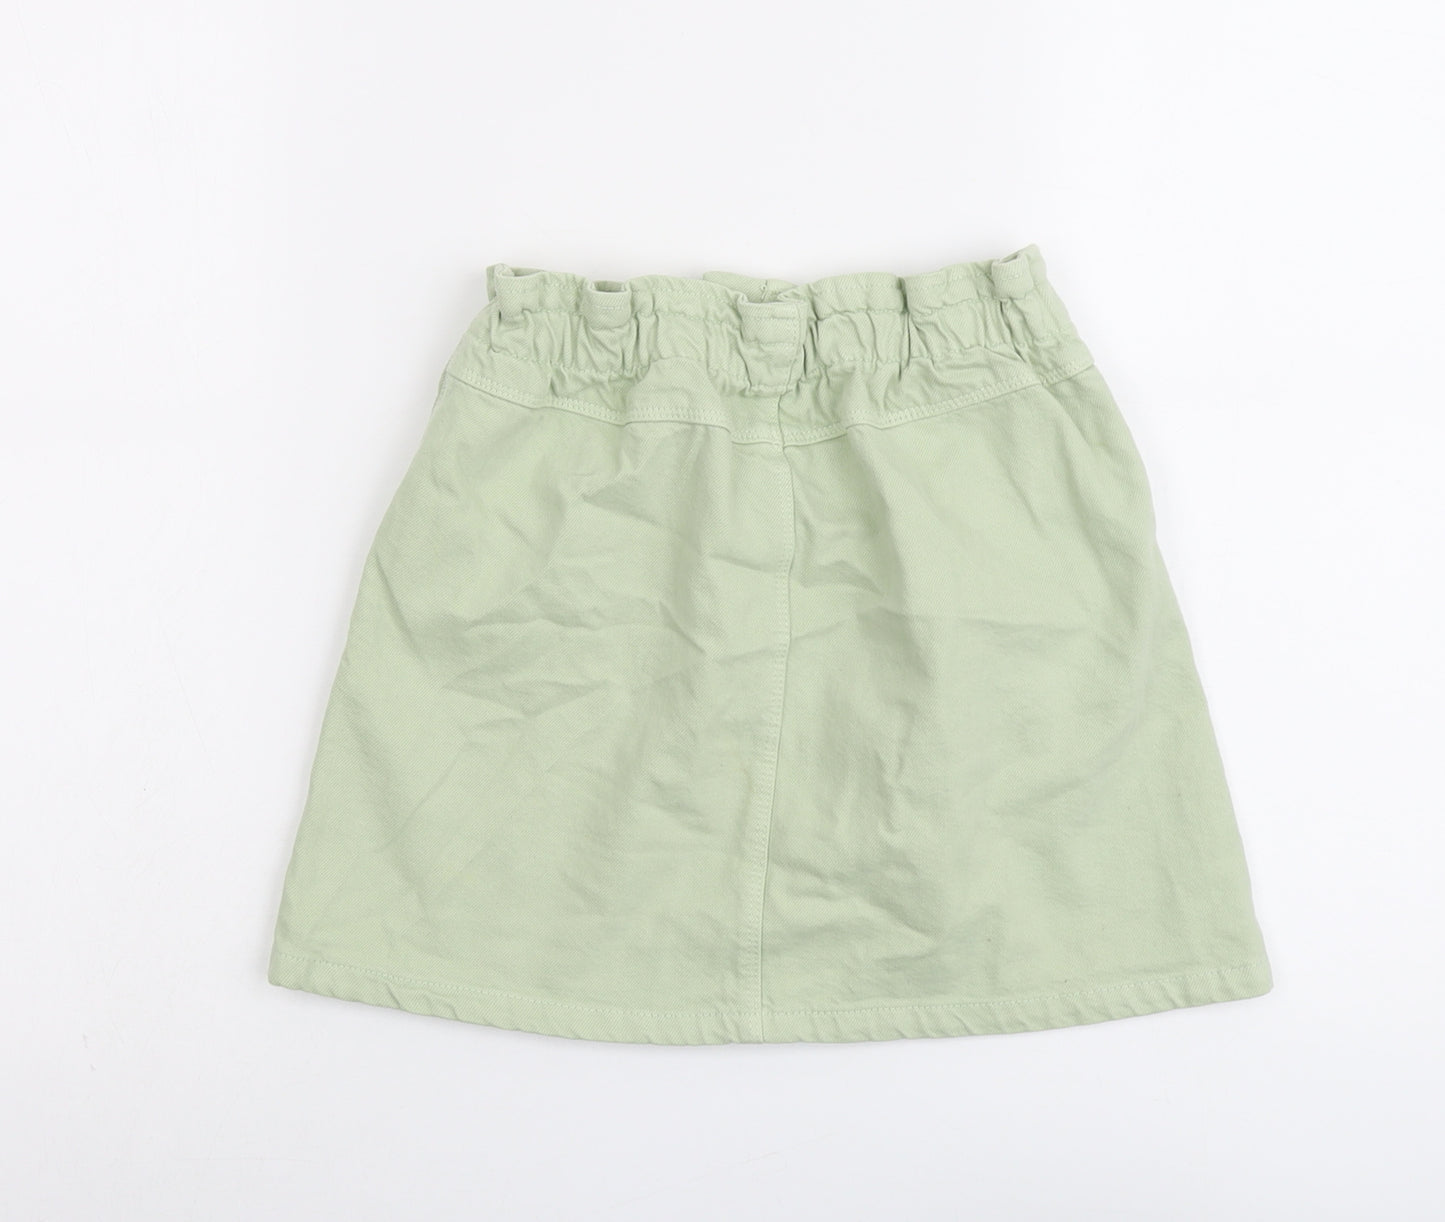 Zara Girls Green Cotton Mini Skirt Size 11-12 Years Regular Button